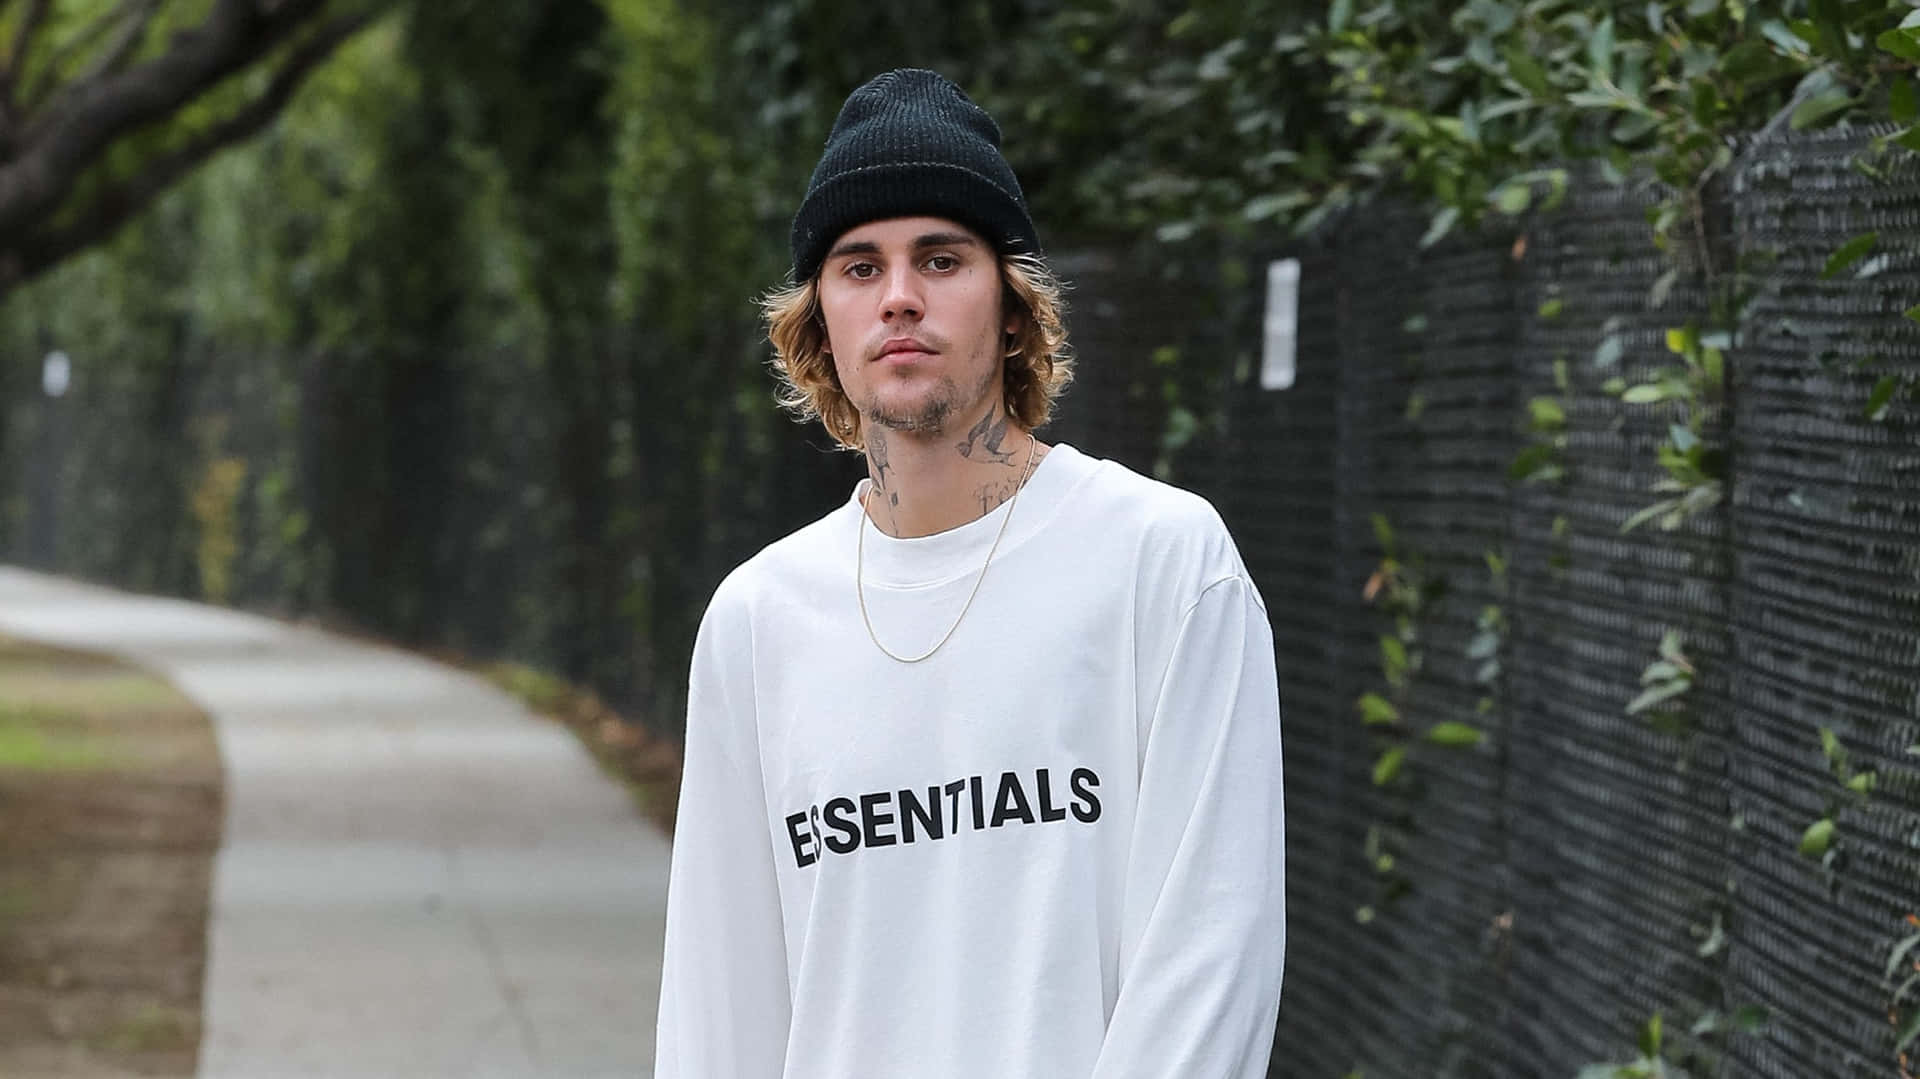 Justinbieber Essentials Tee Wallpaper